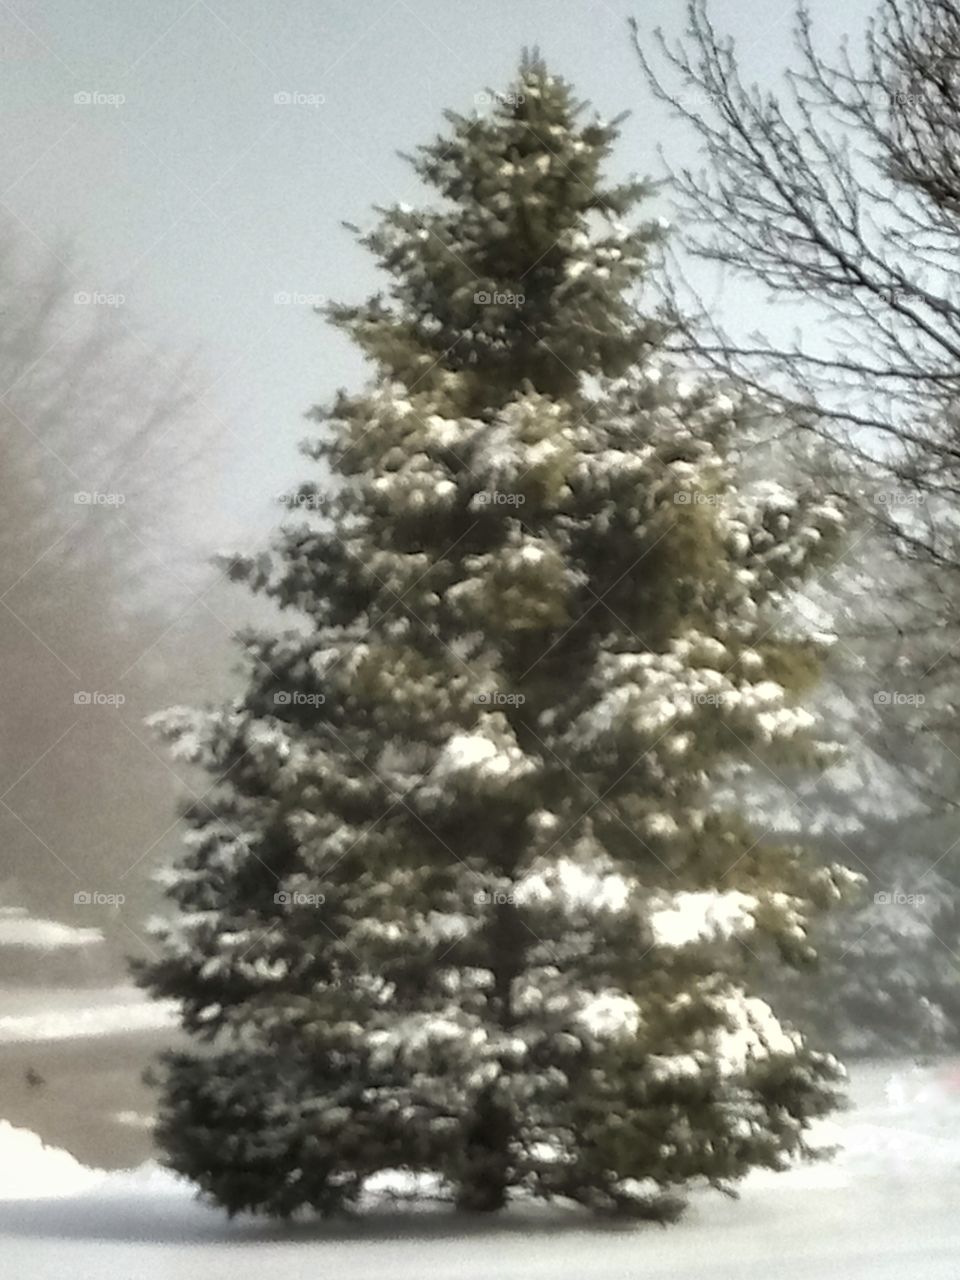 Picture perfect winter pine